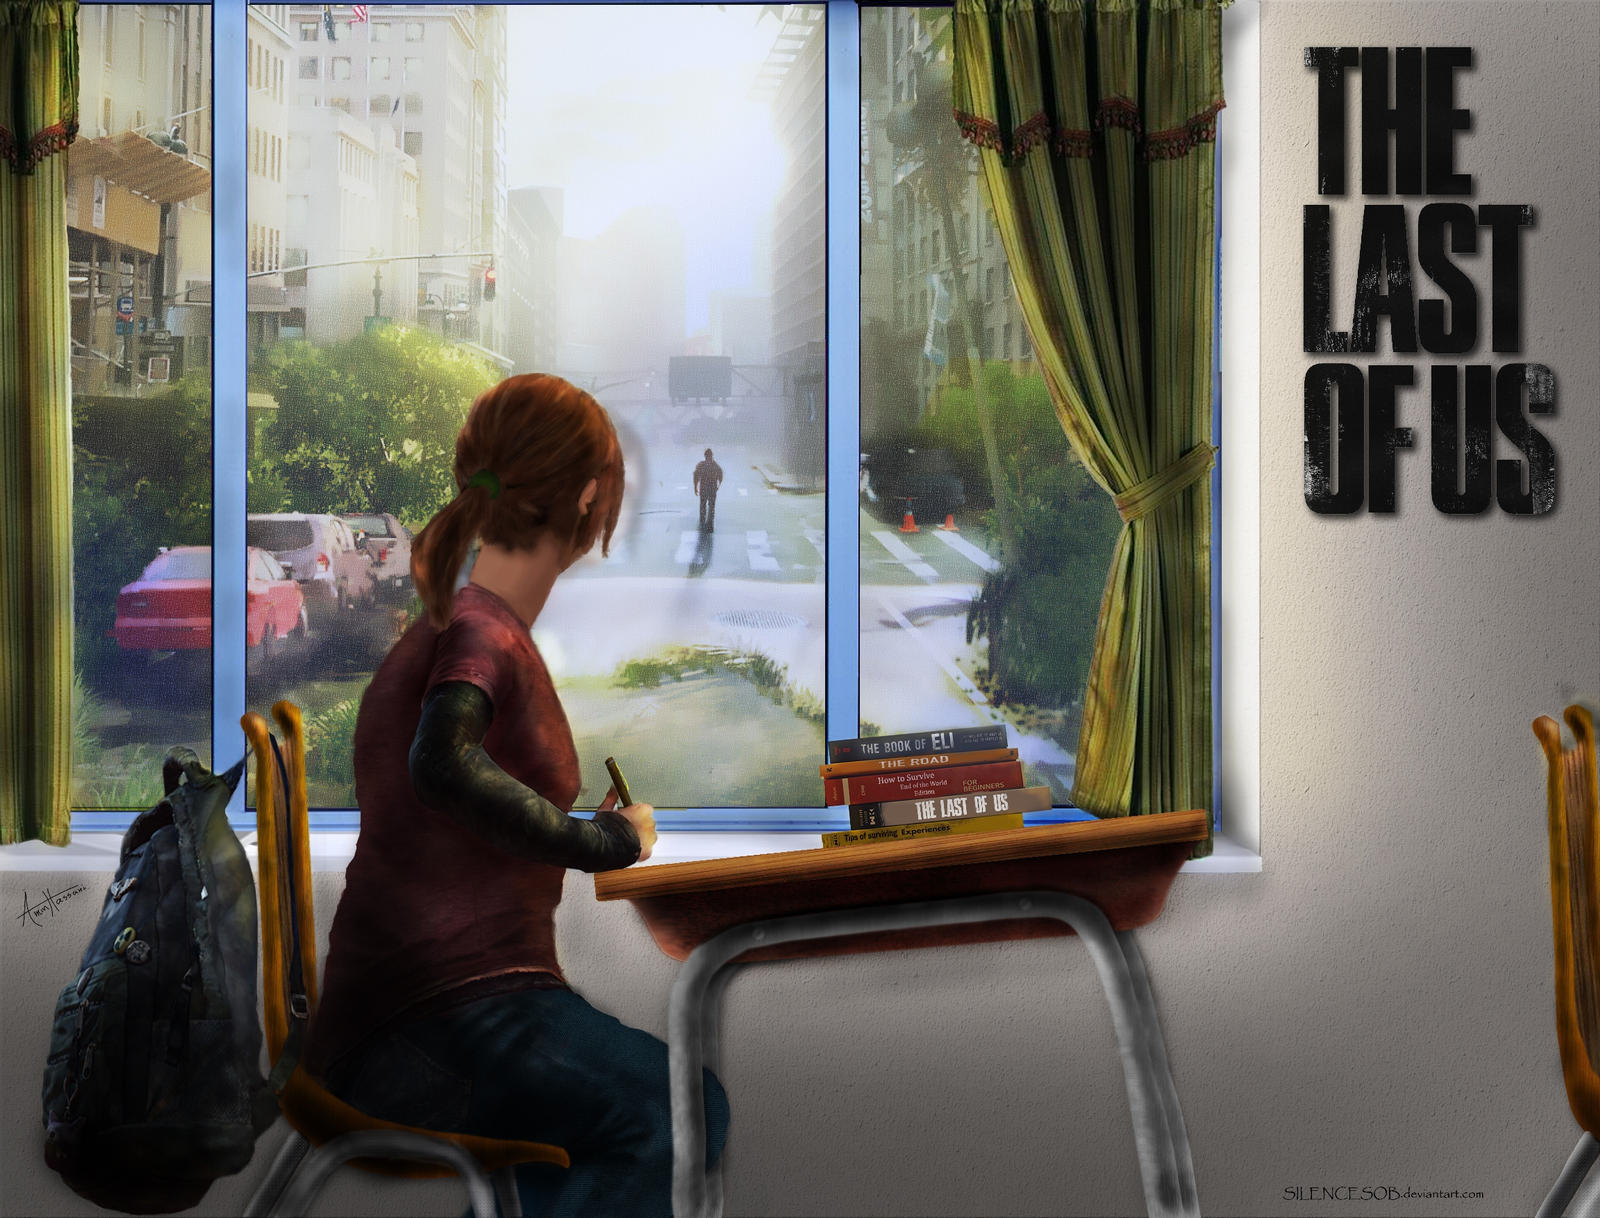 The Last Of Us Wallpaper HD by LukasPfaff on DeviantArt